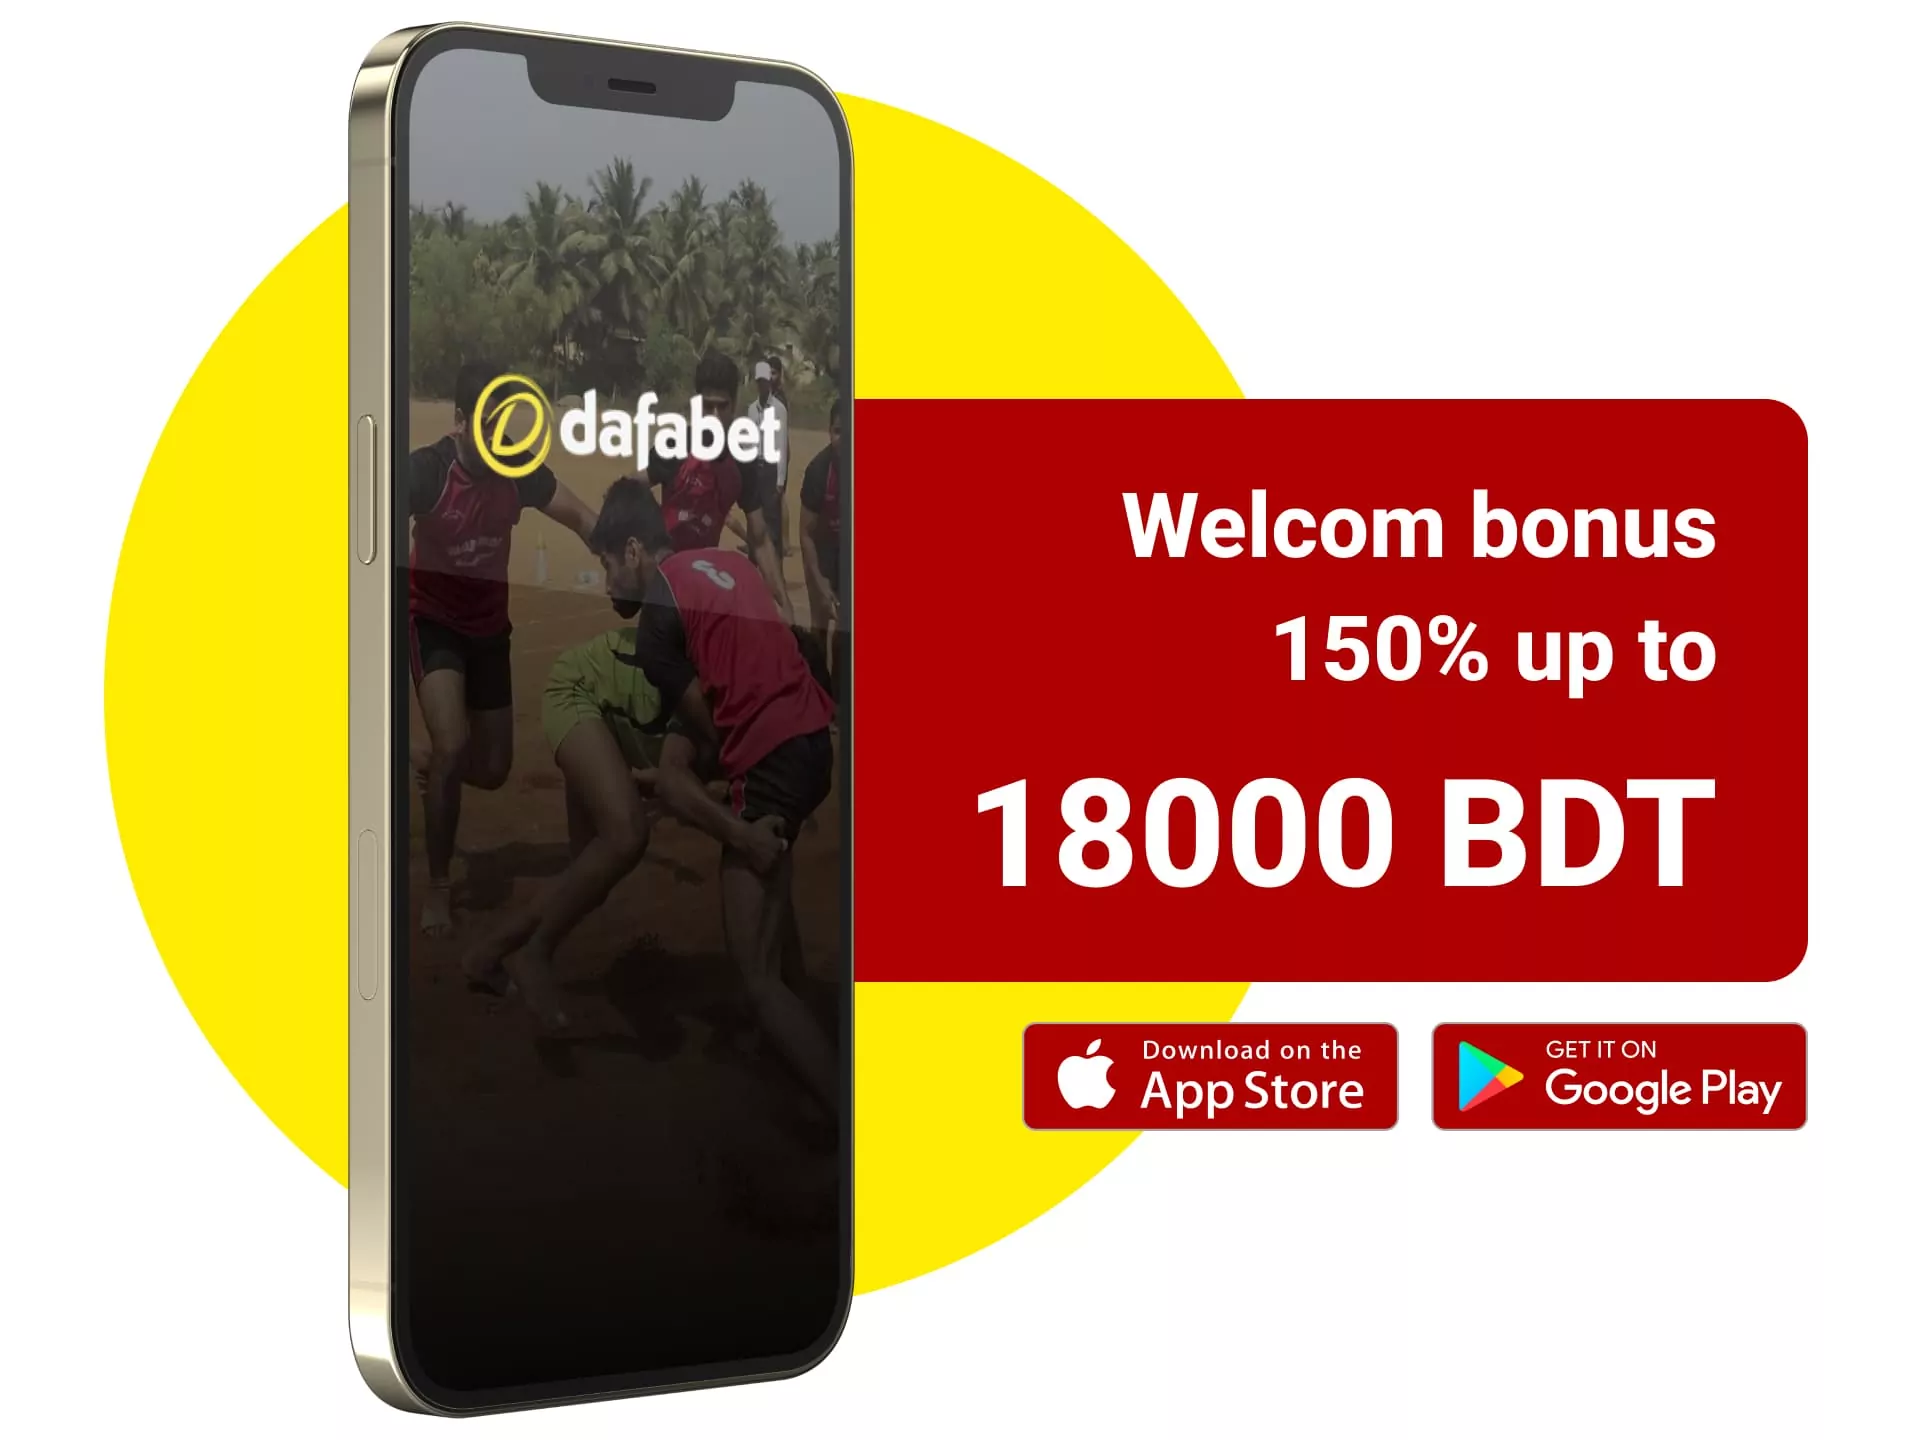 Dafabet kabaddi betting website gives 150% welcome bonus up to 18,000 BDT.